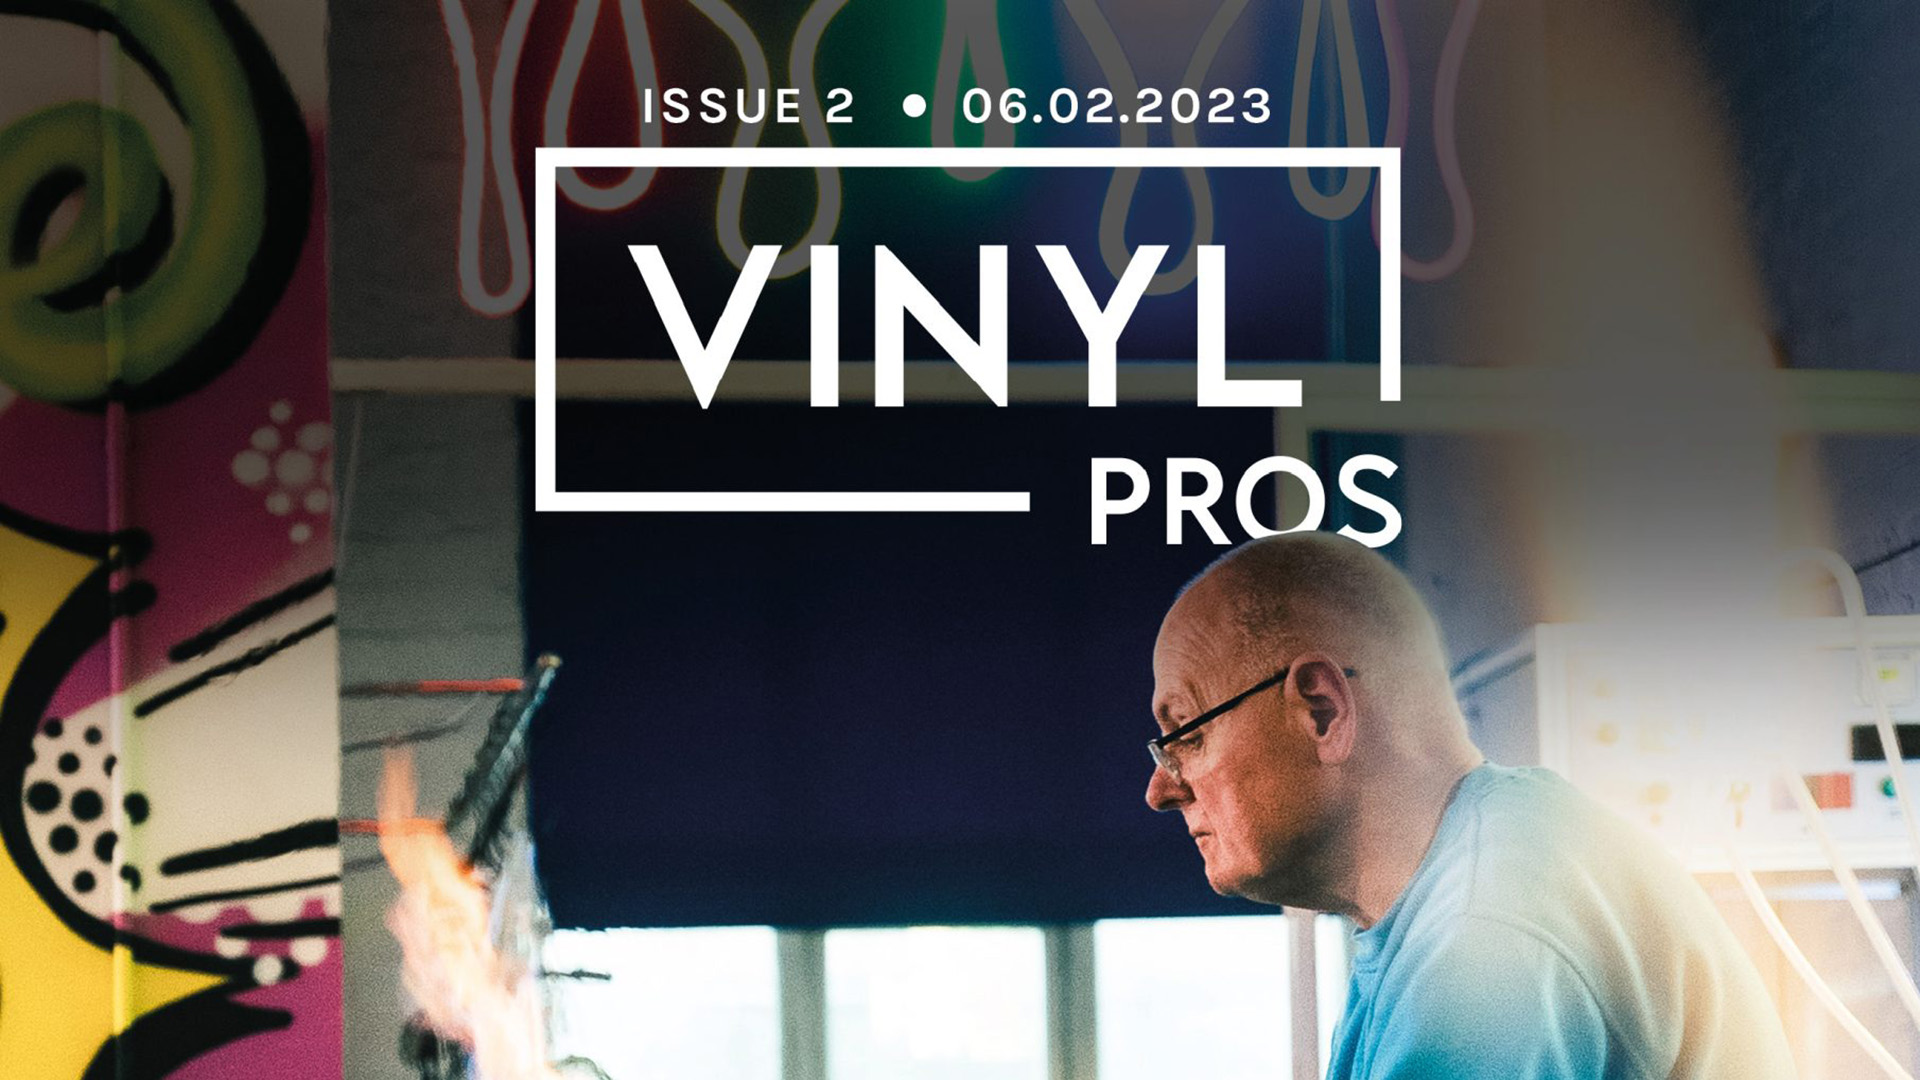 vinyl pros issue 2 feature